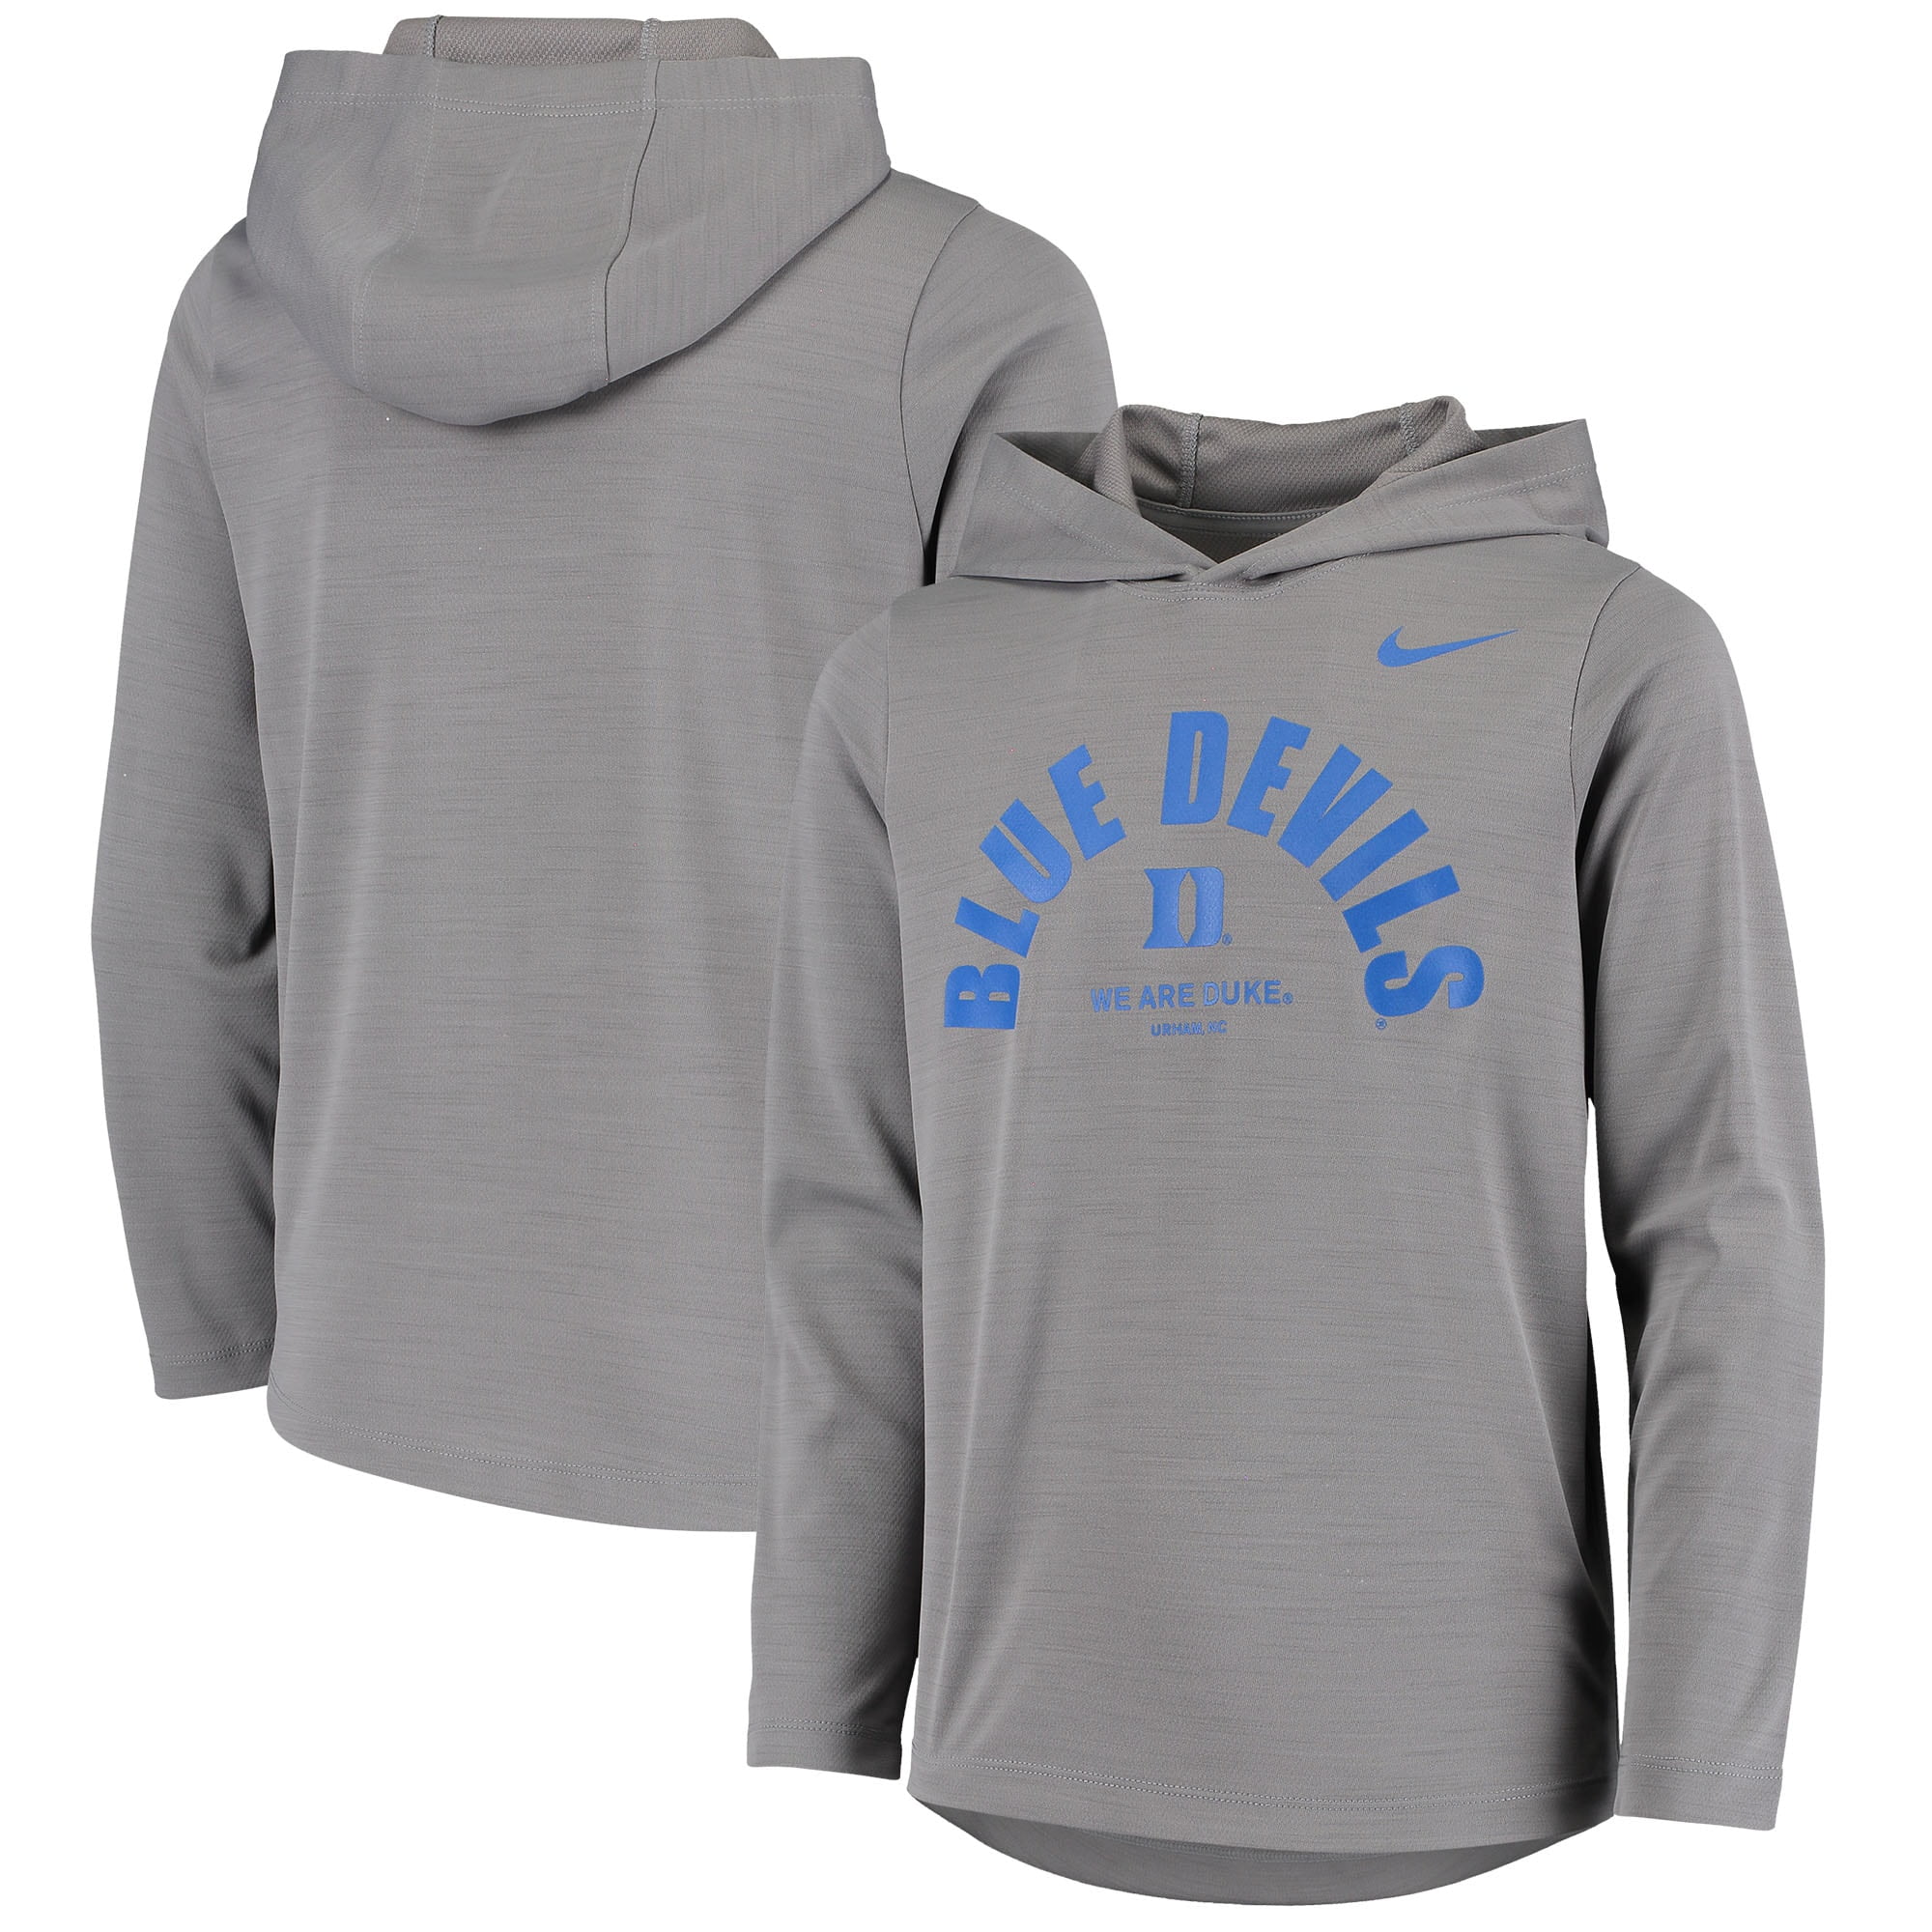 Duke Blue Devils Nike Youth Long Sleeve 